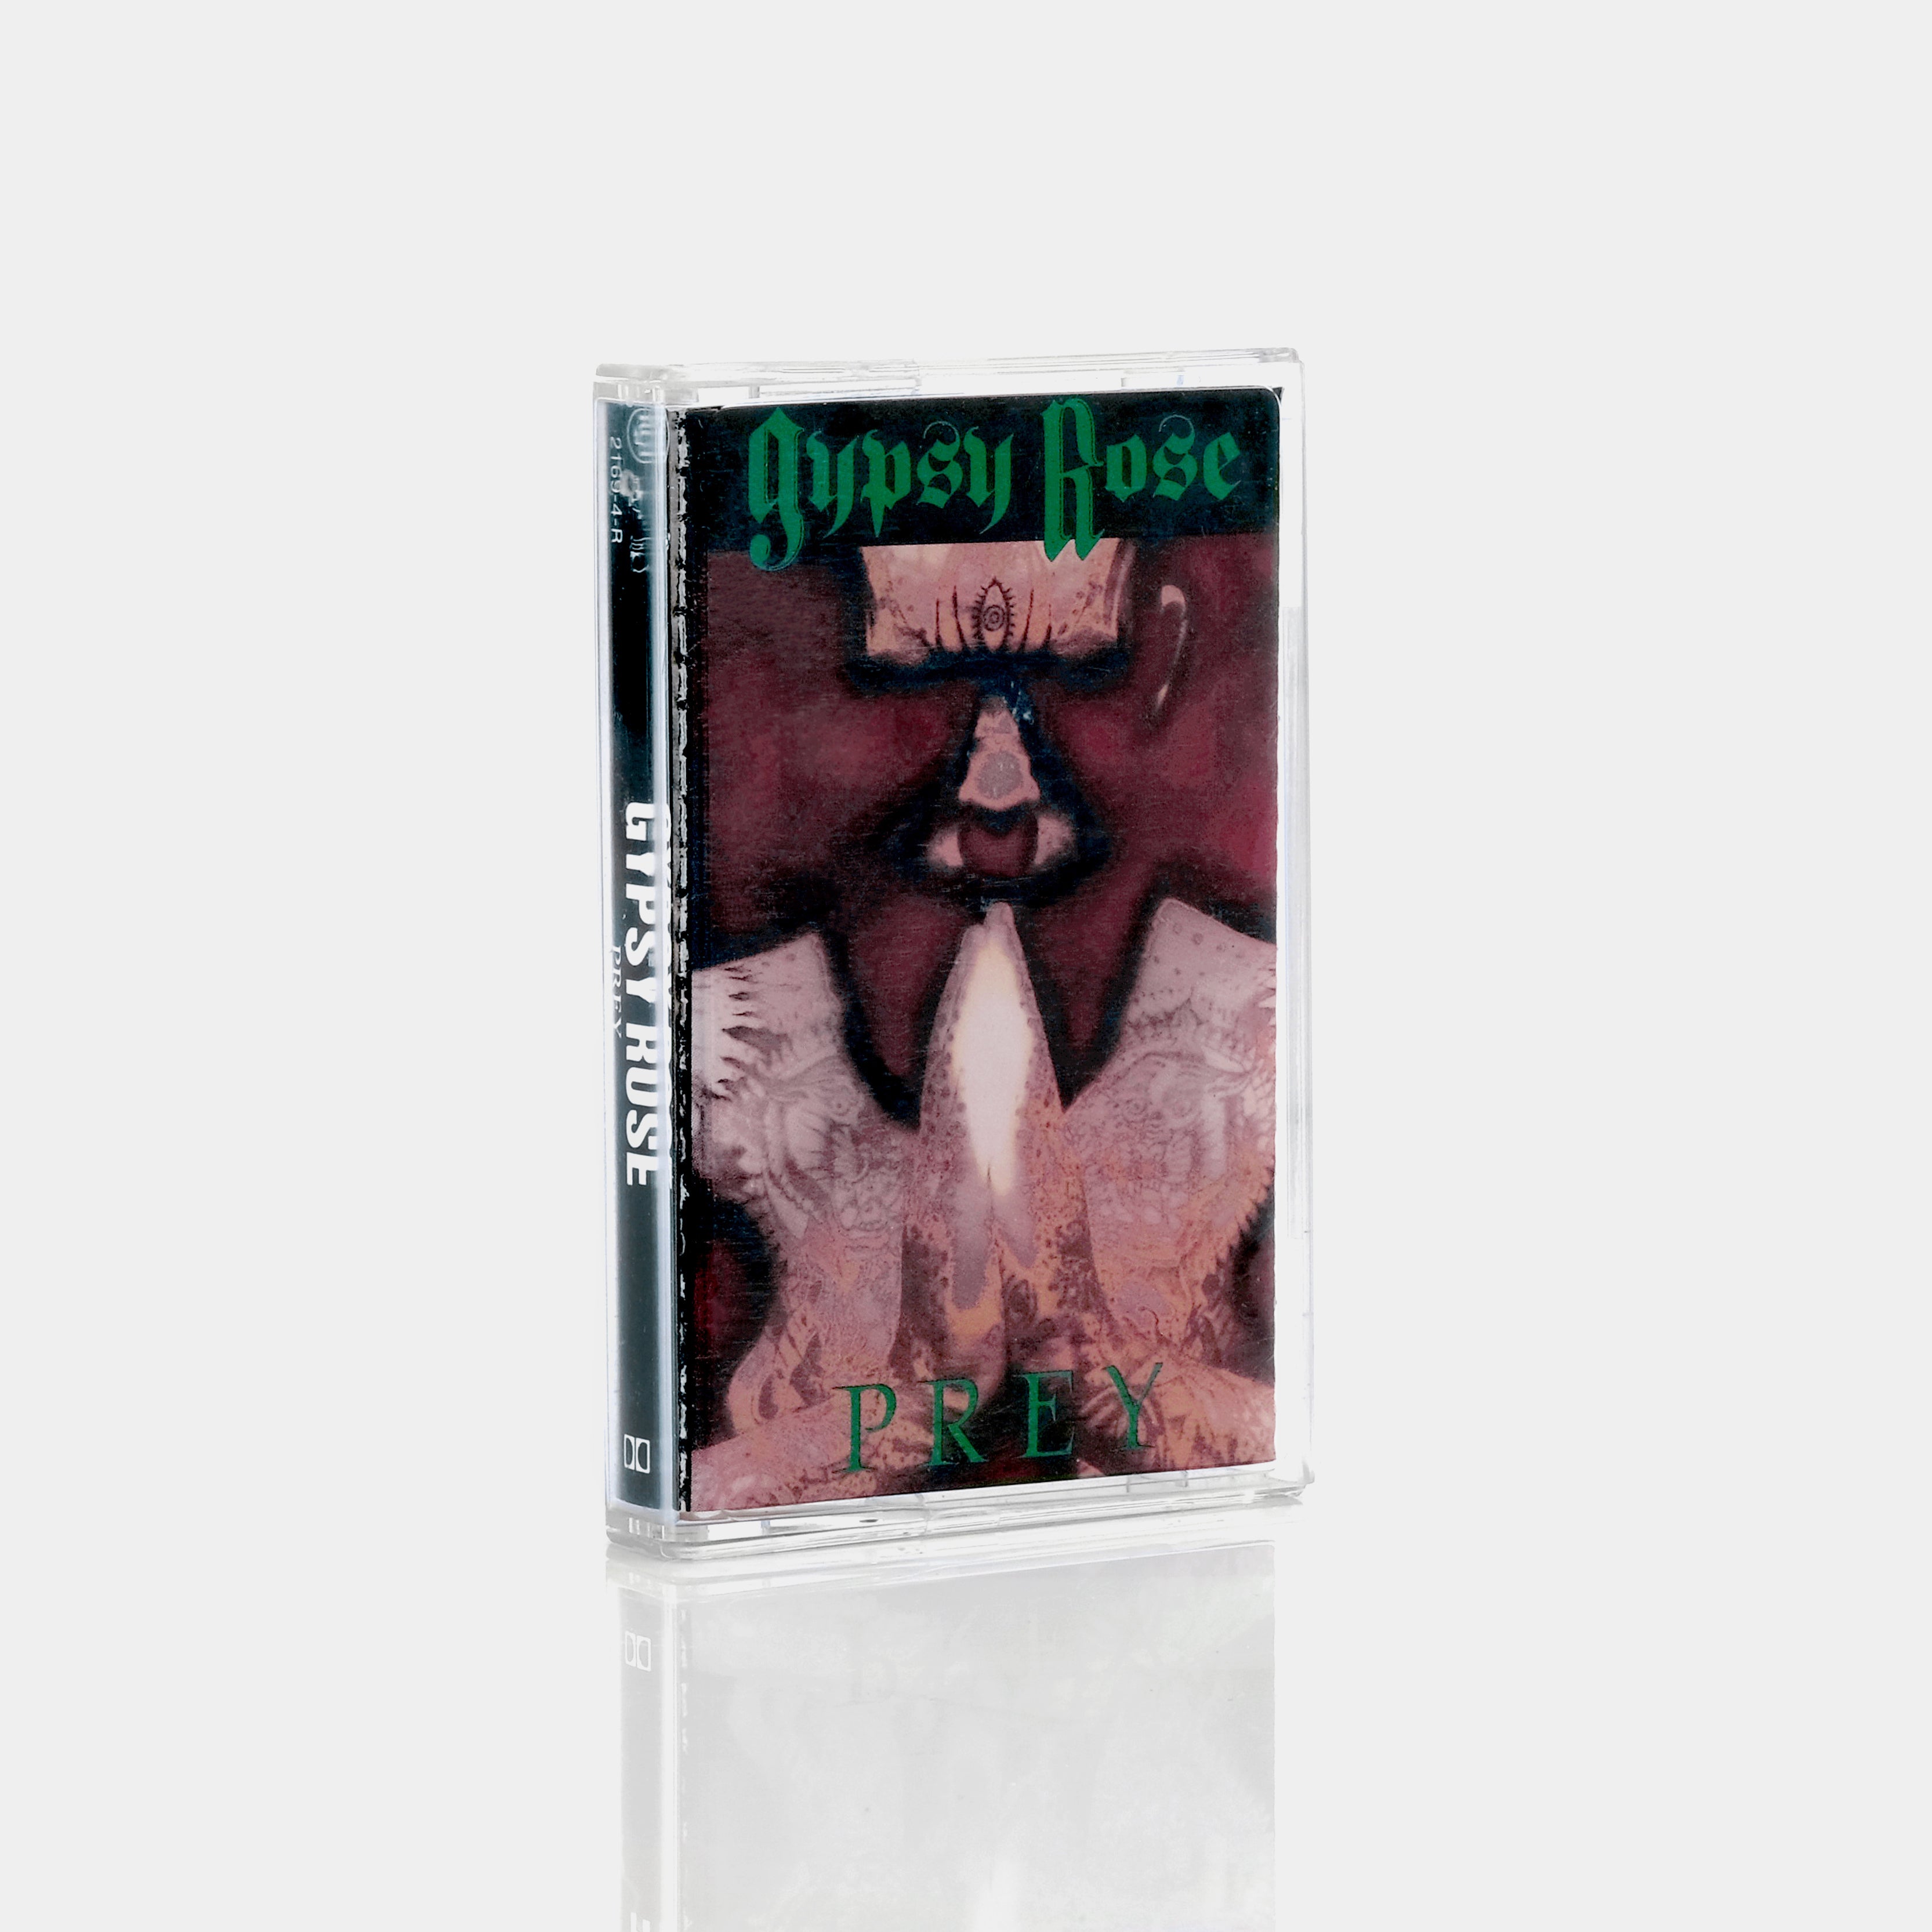 Gypsy Rose - Prey Cassette Tape